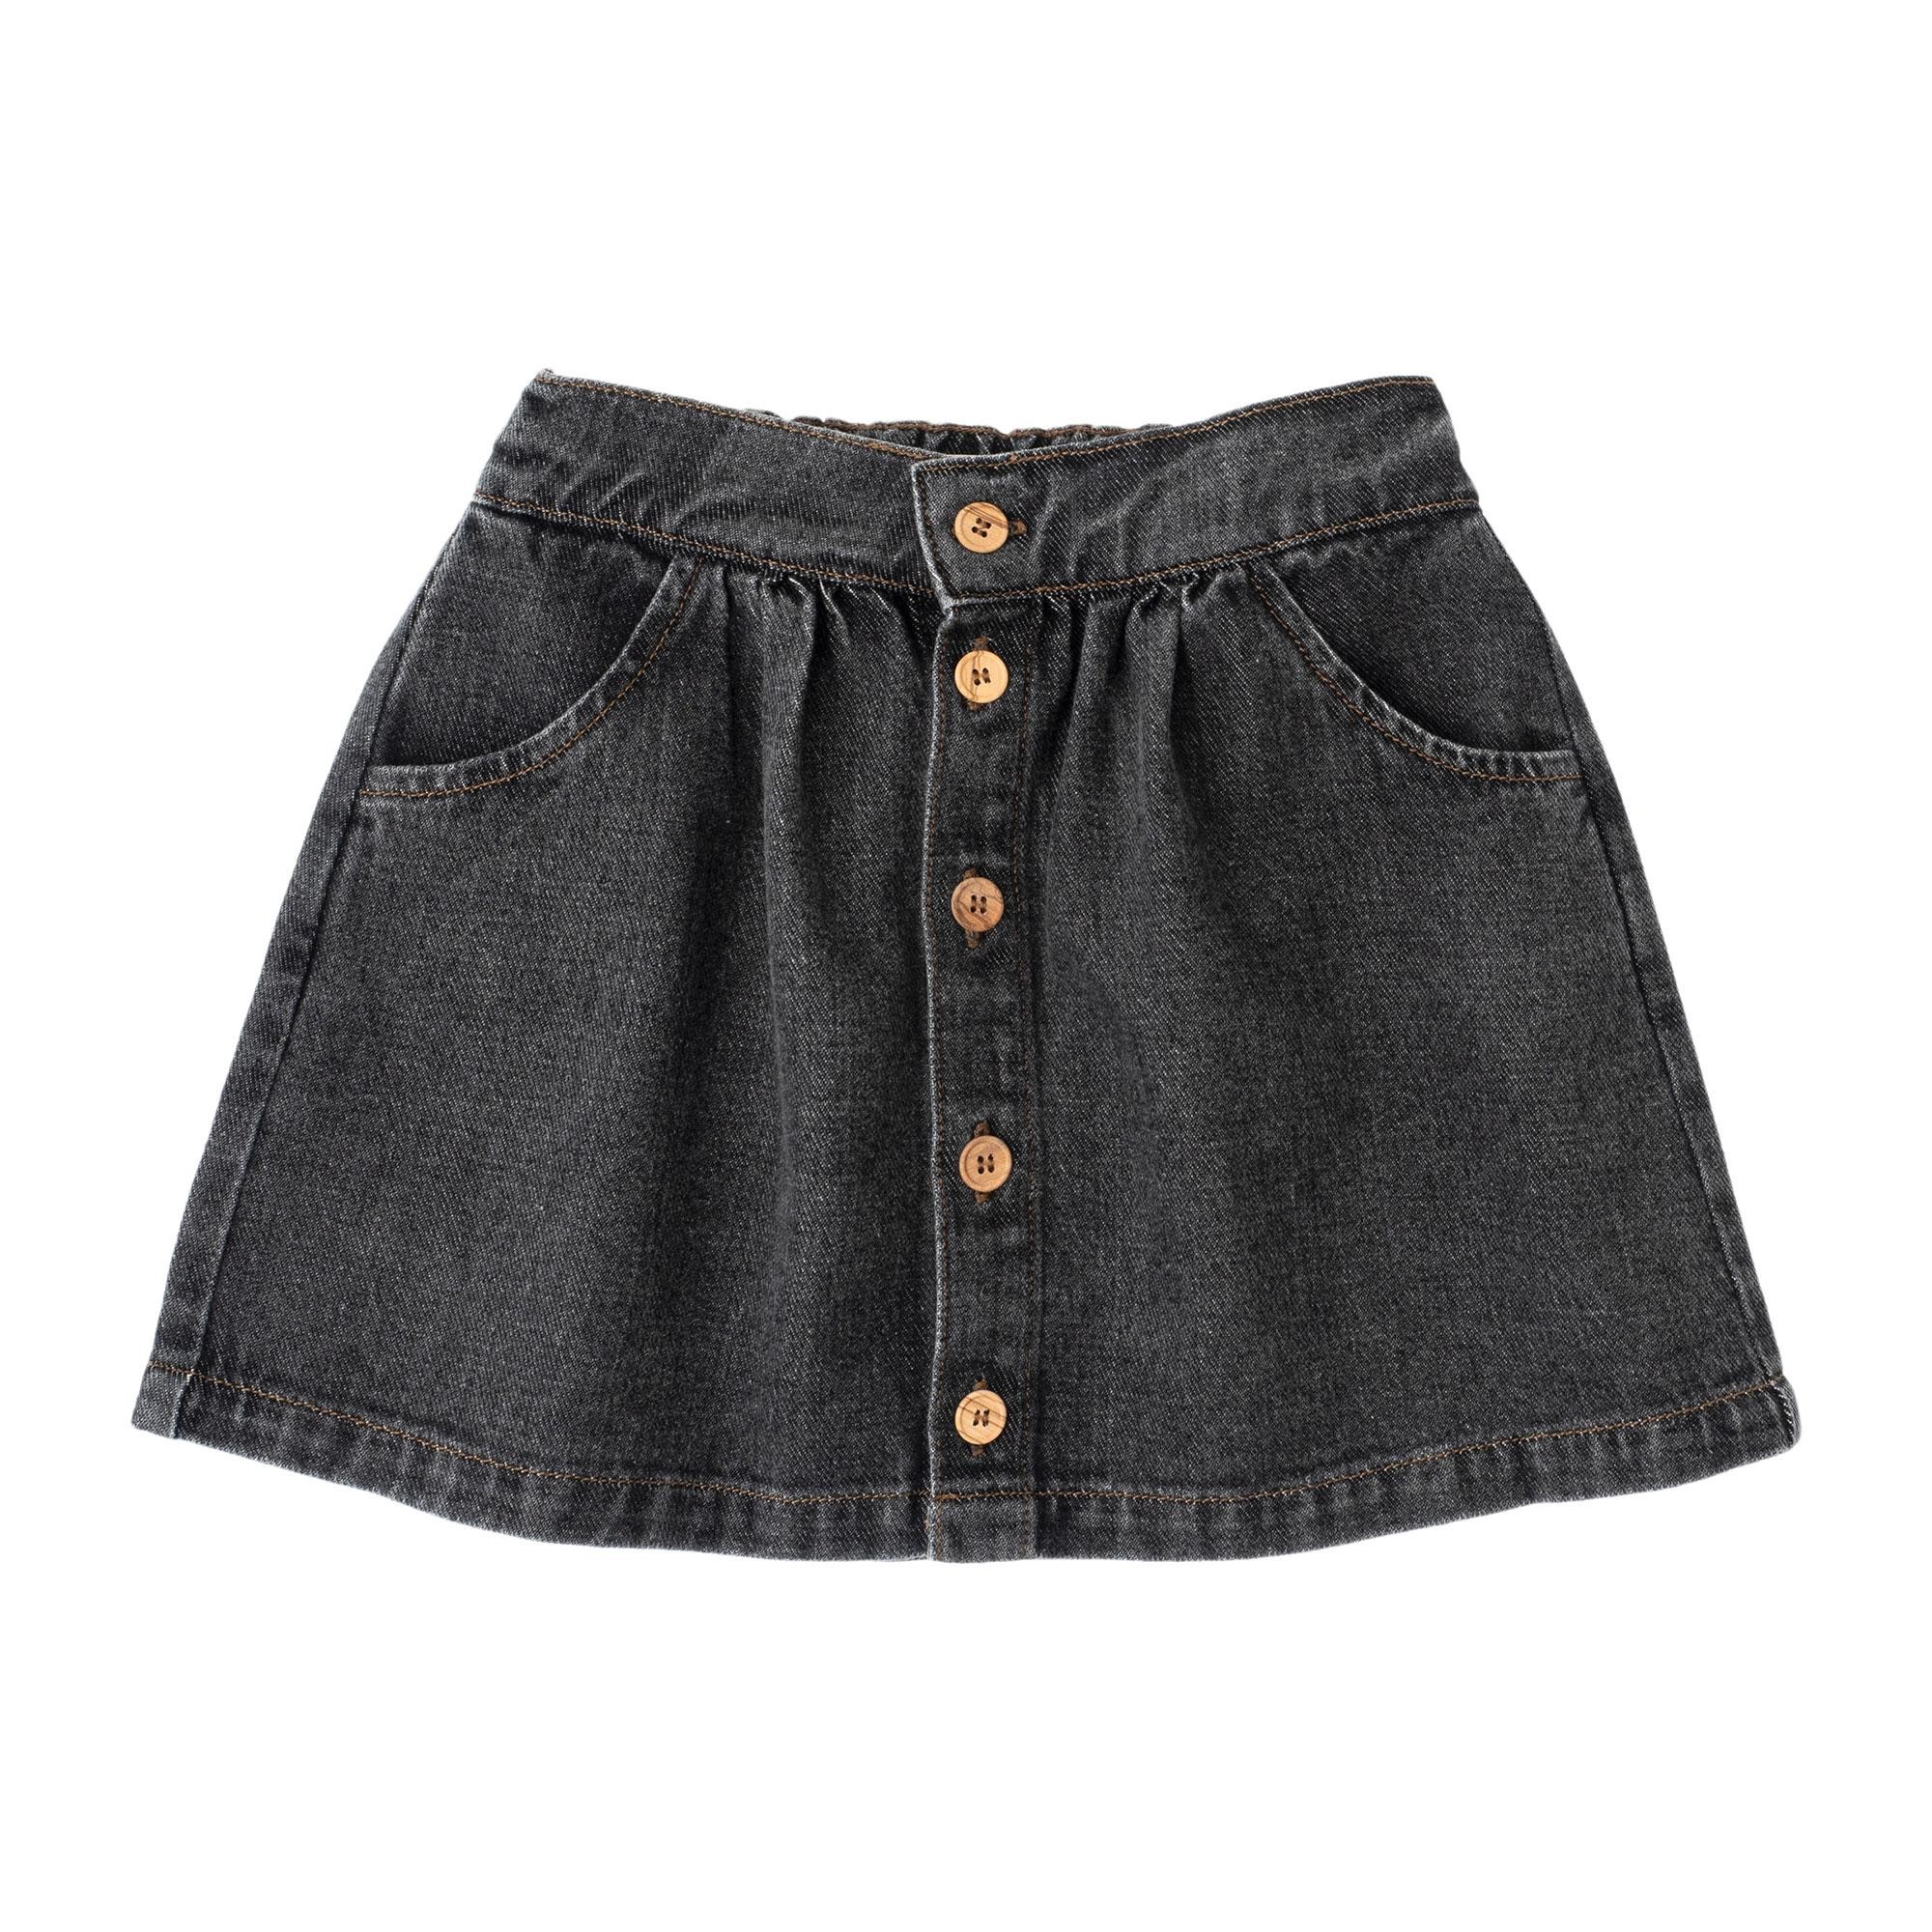 discount 75% Black ONLY ONLY denim skirt KIDS FASHION Skirts Jean 